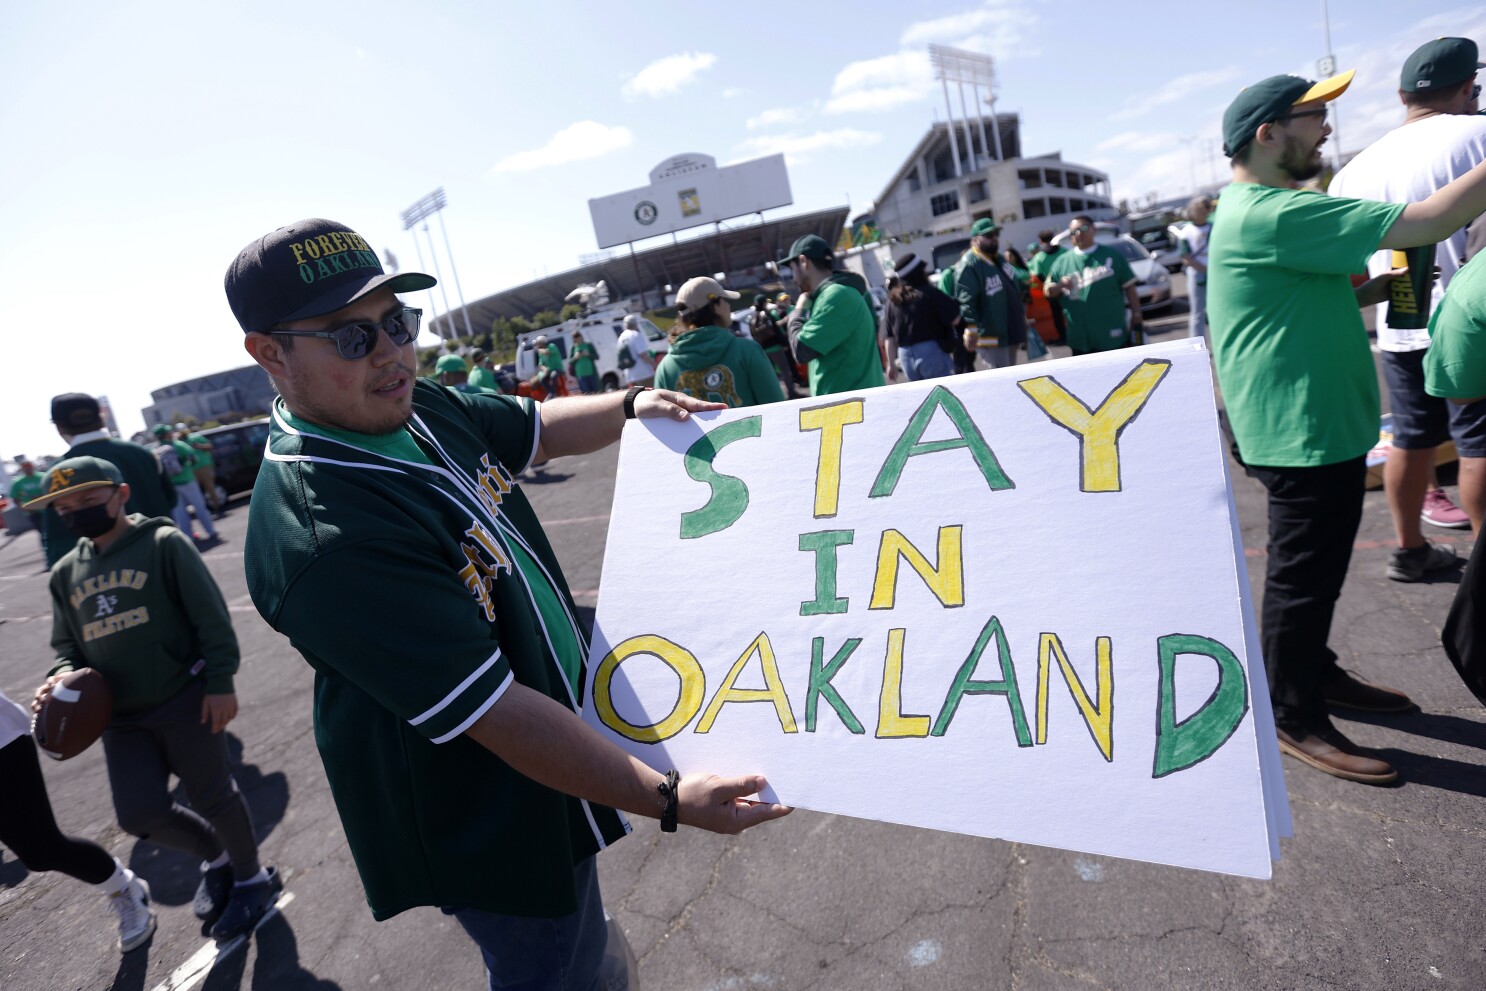 Regional expropriation': East Bay fans call foul on Warriors' Oakland  jerseys